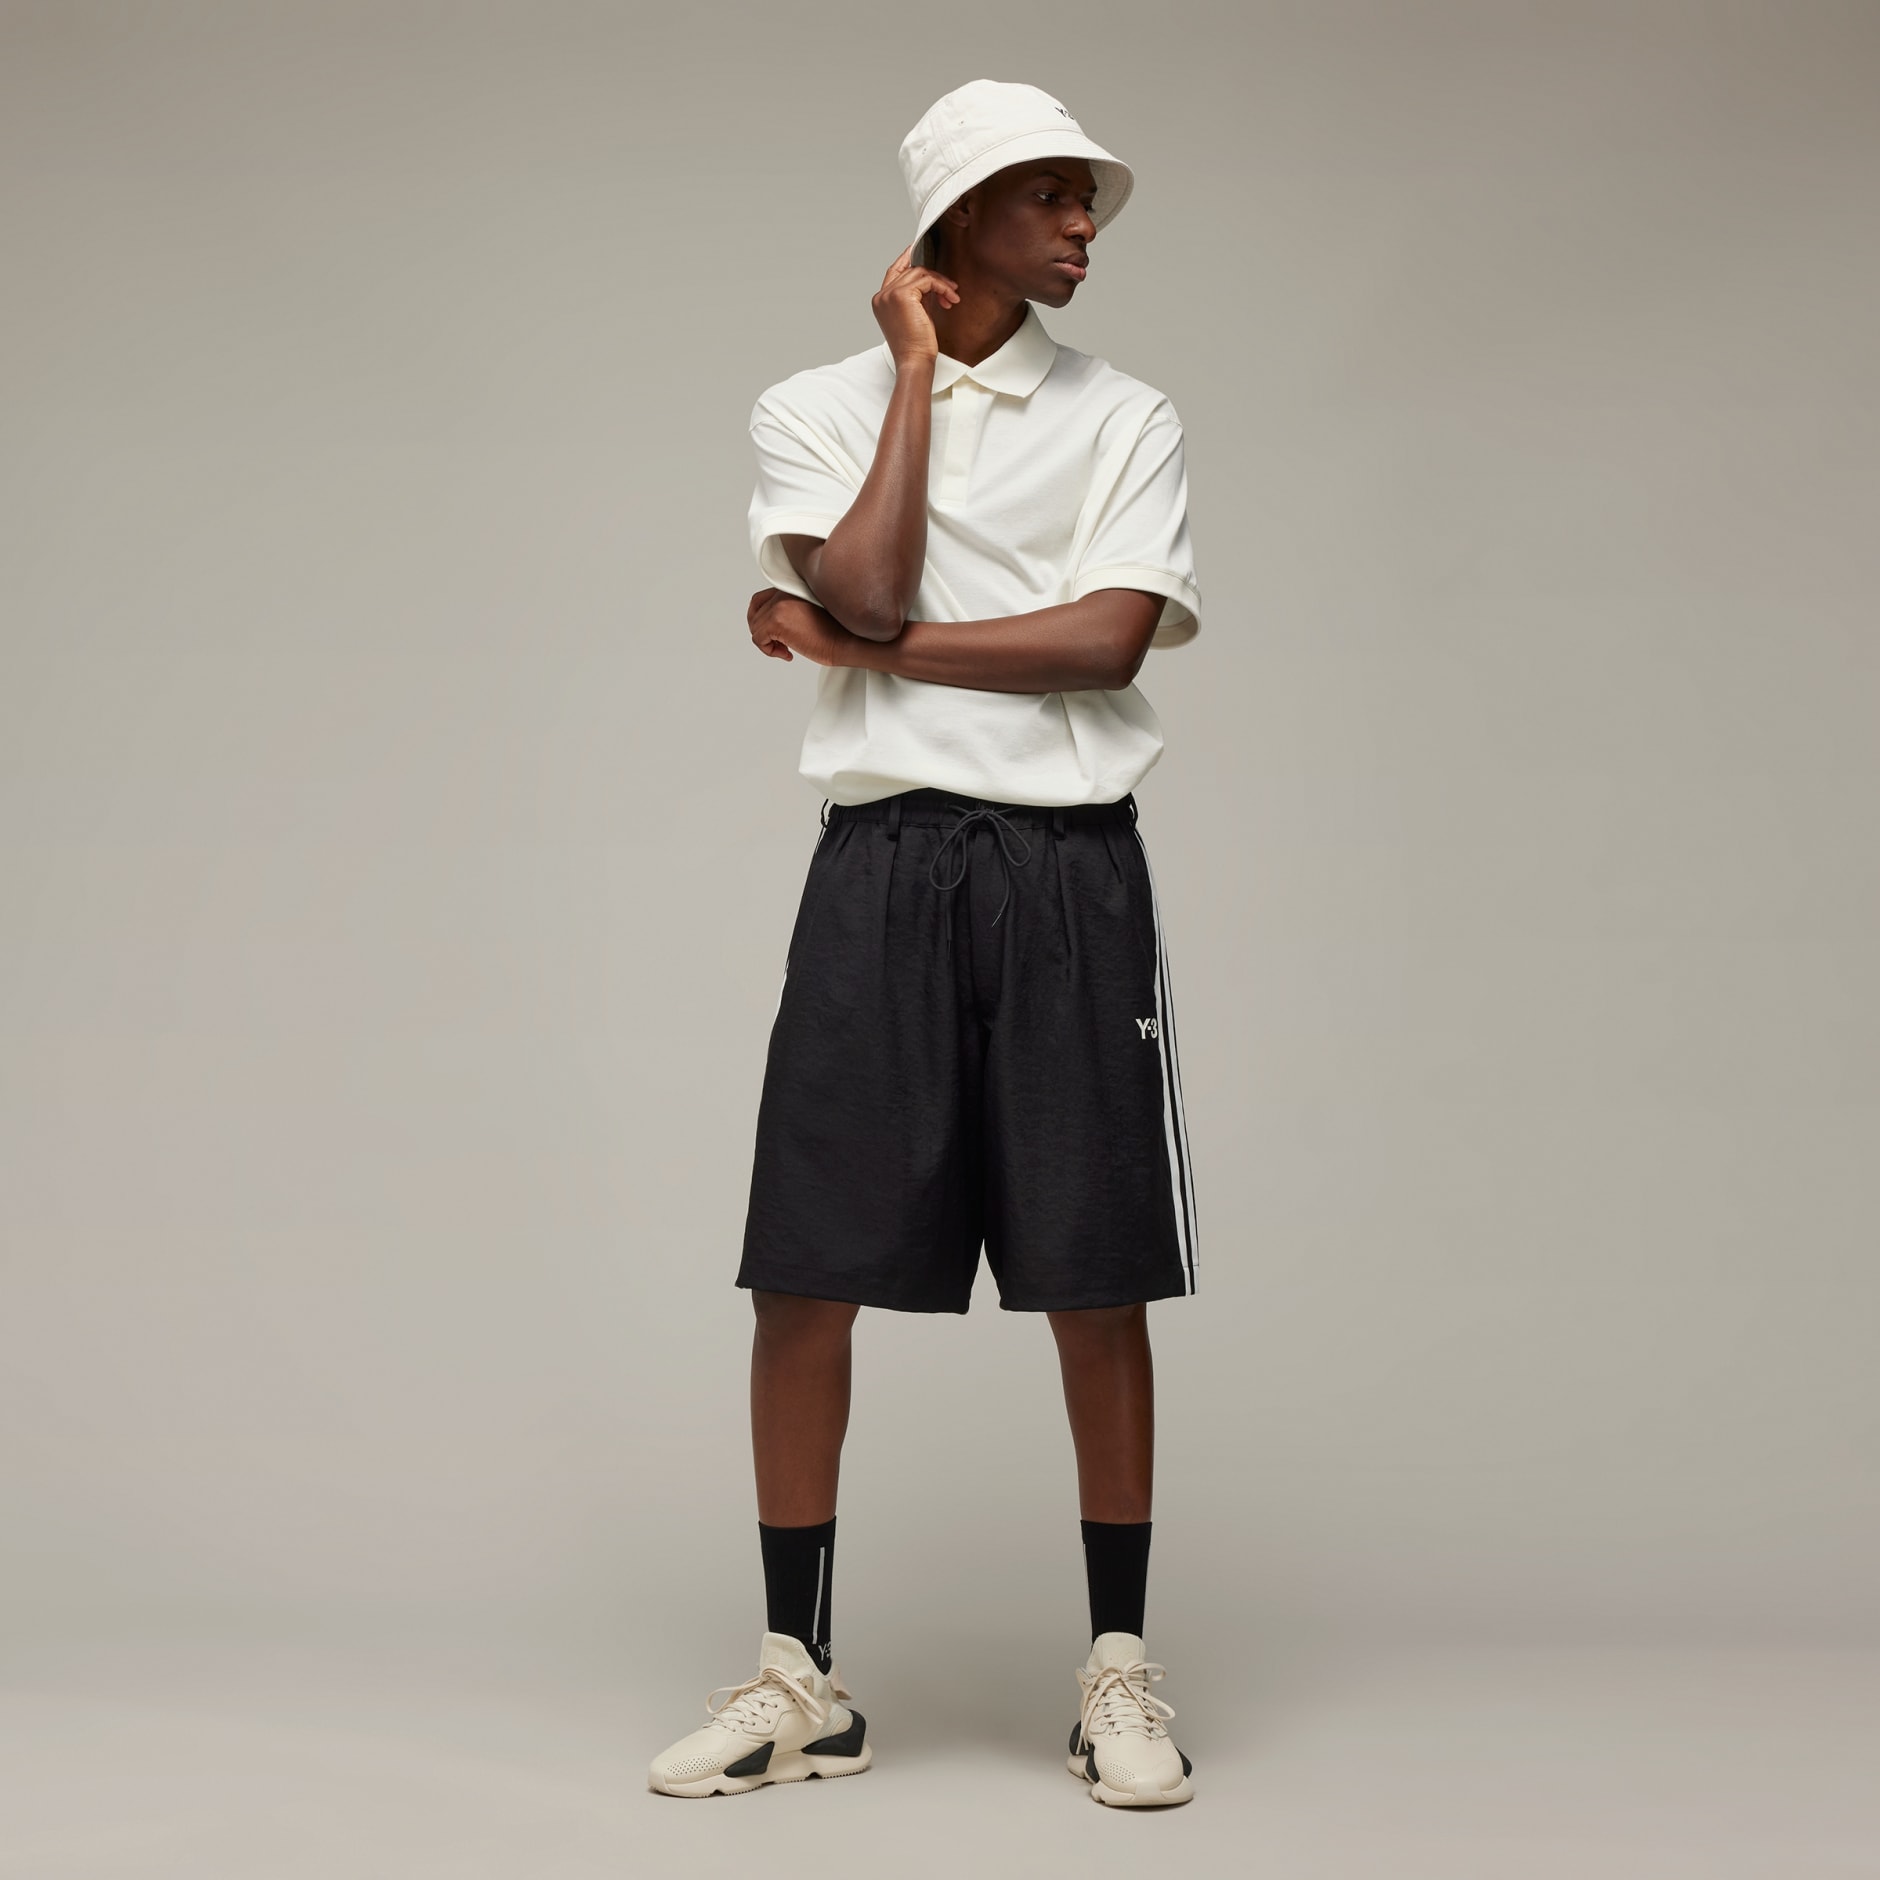 Clothing - Y-3 Short Sleeve Polo Shirt - White | adidas South Africa